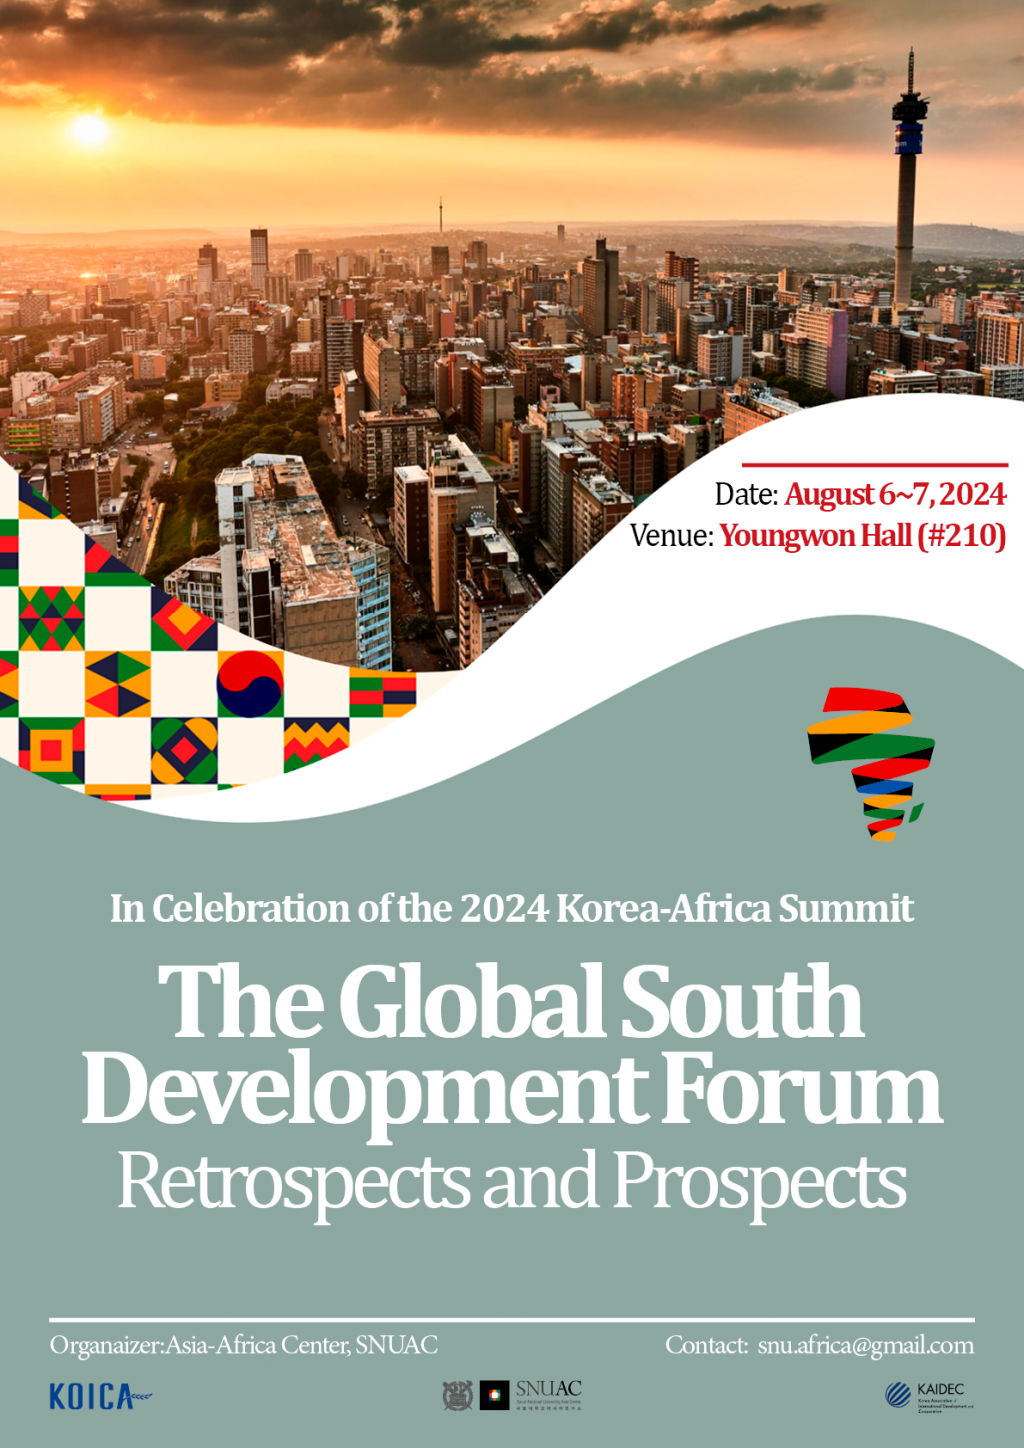 The Global South Development Forum